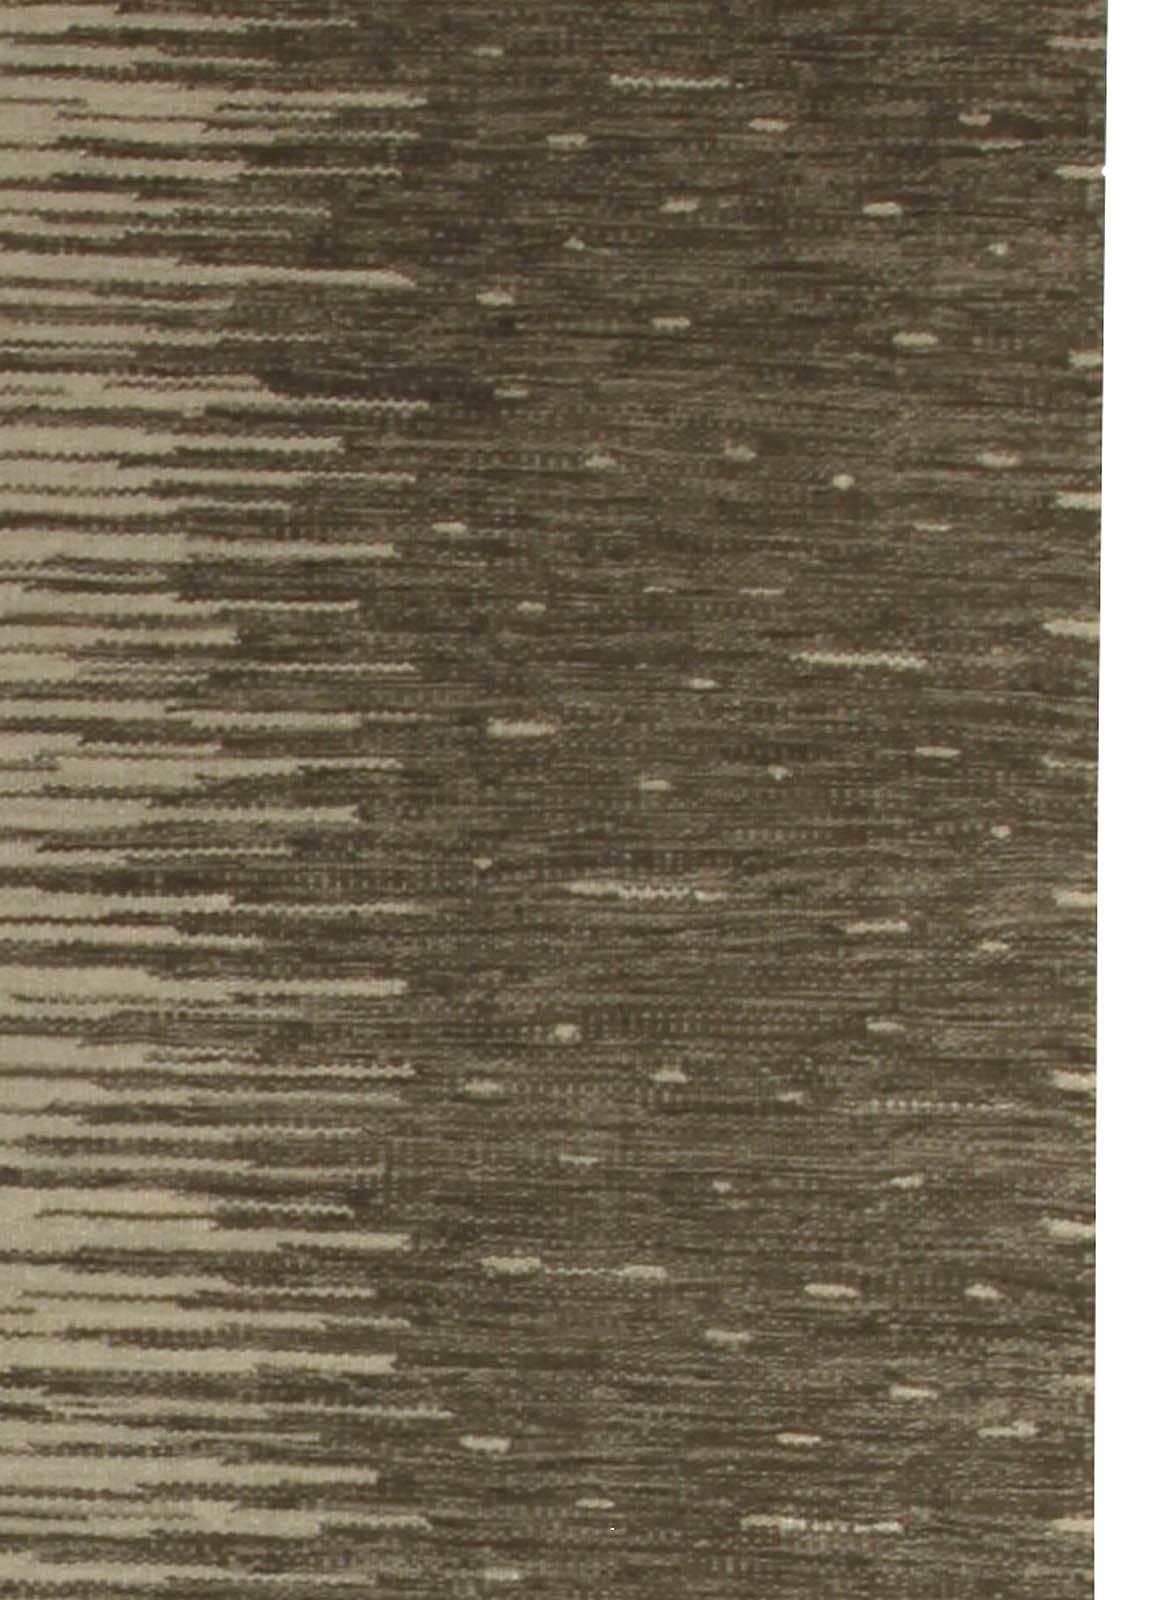 Hand-Woven Contemporary Forel Scandinavian Style Brown, Beige Wool Rug by Doris Leslie Blau For Sale